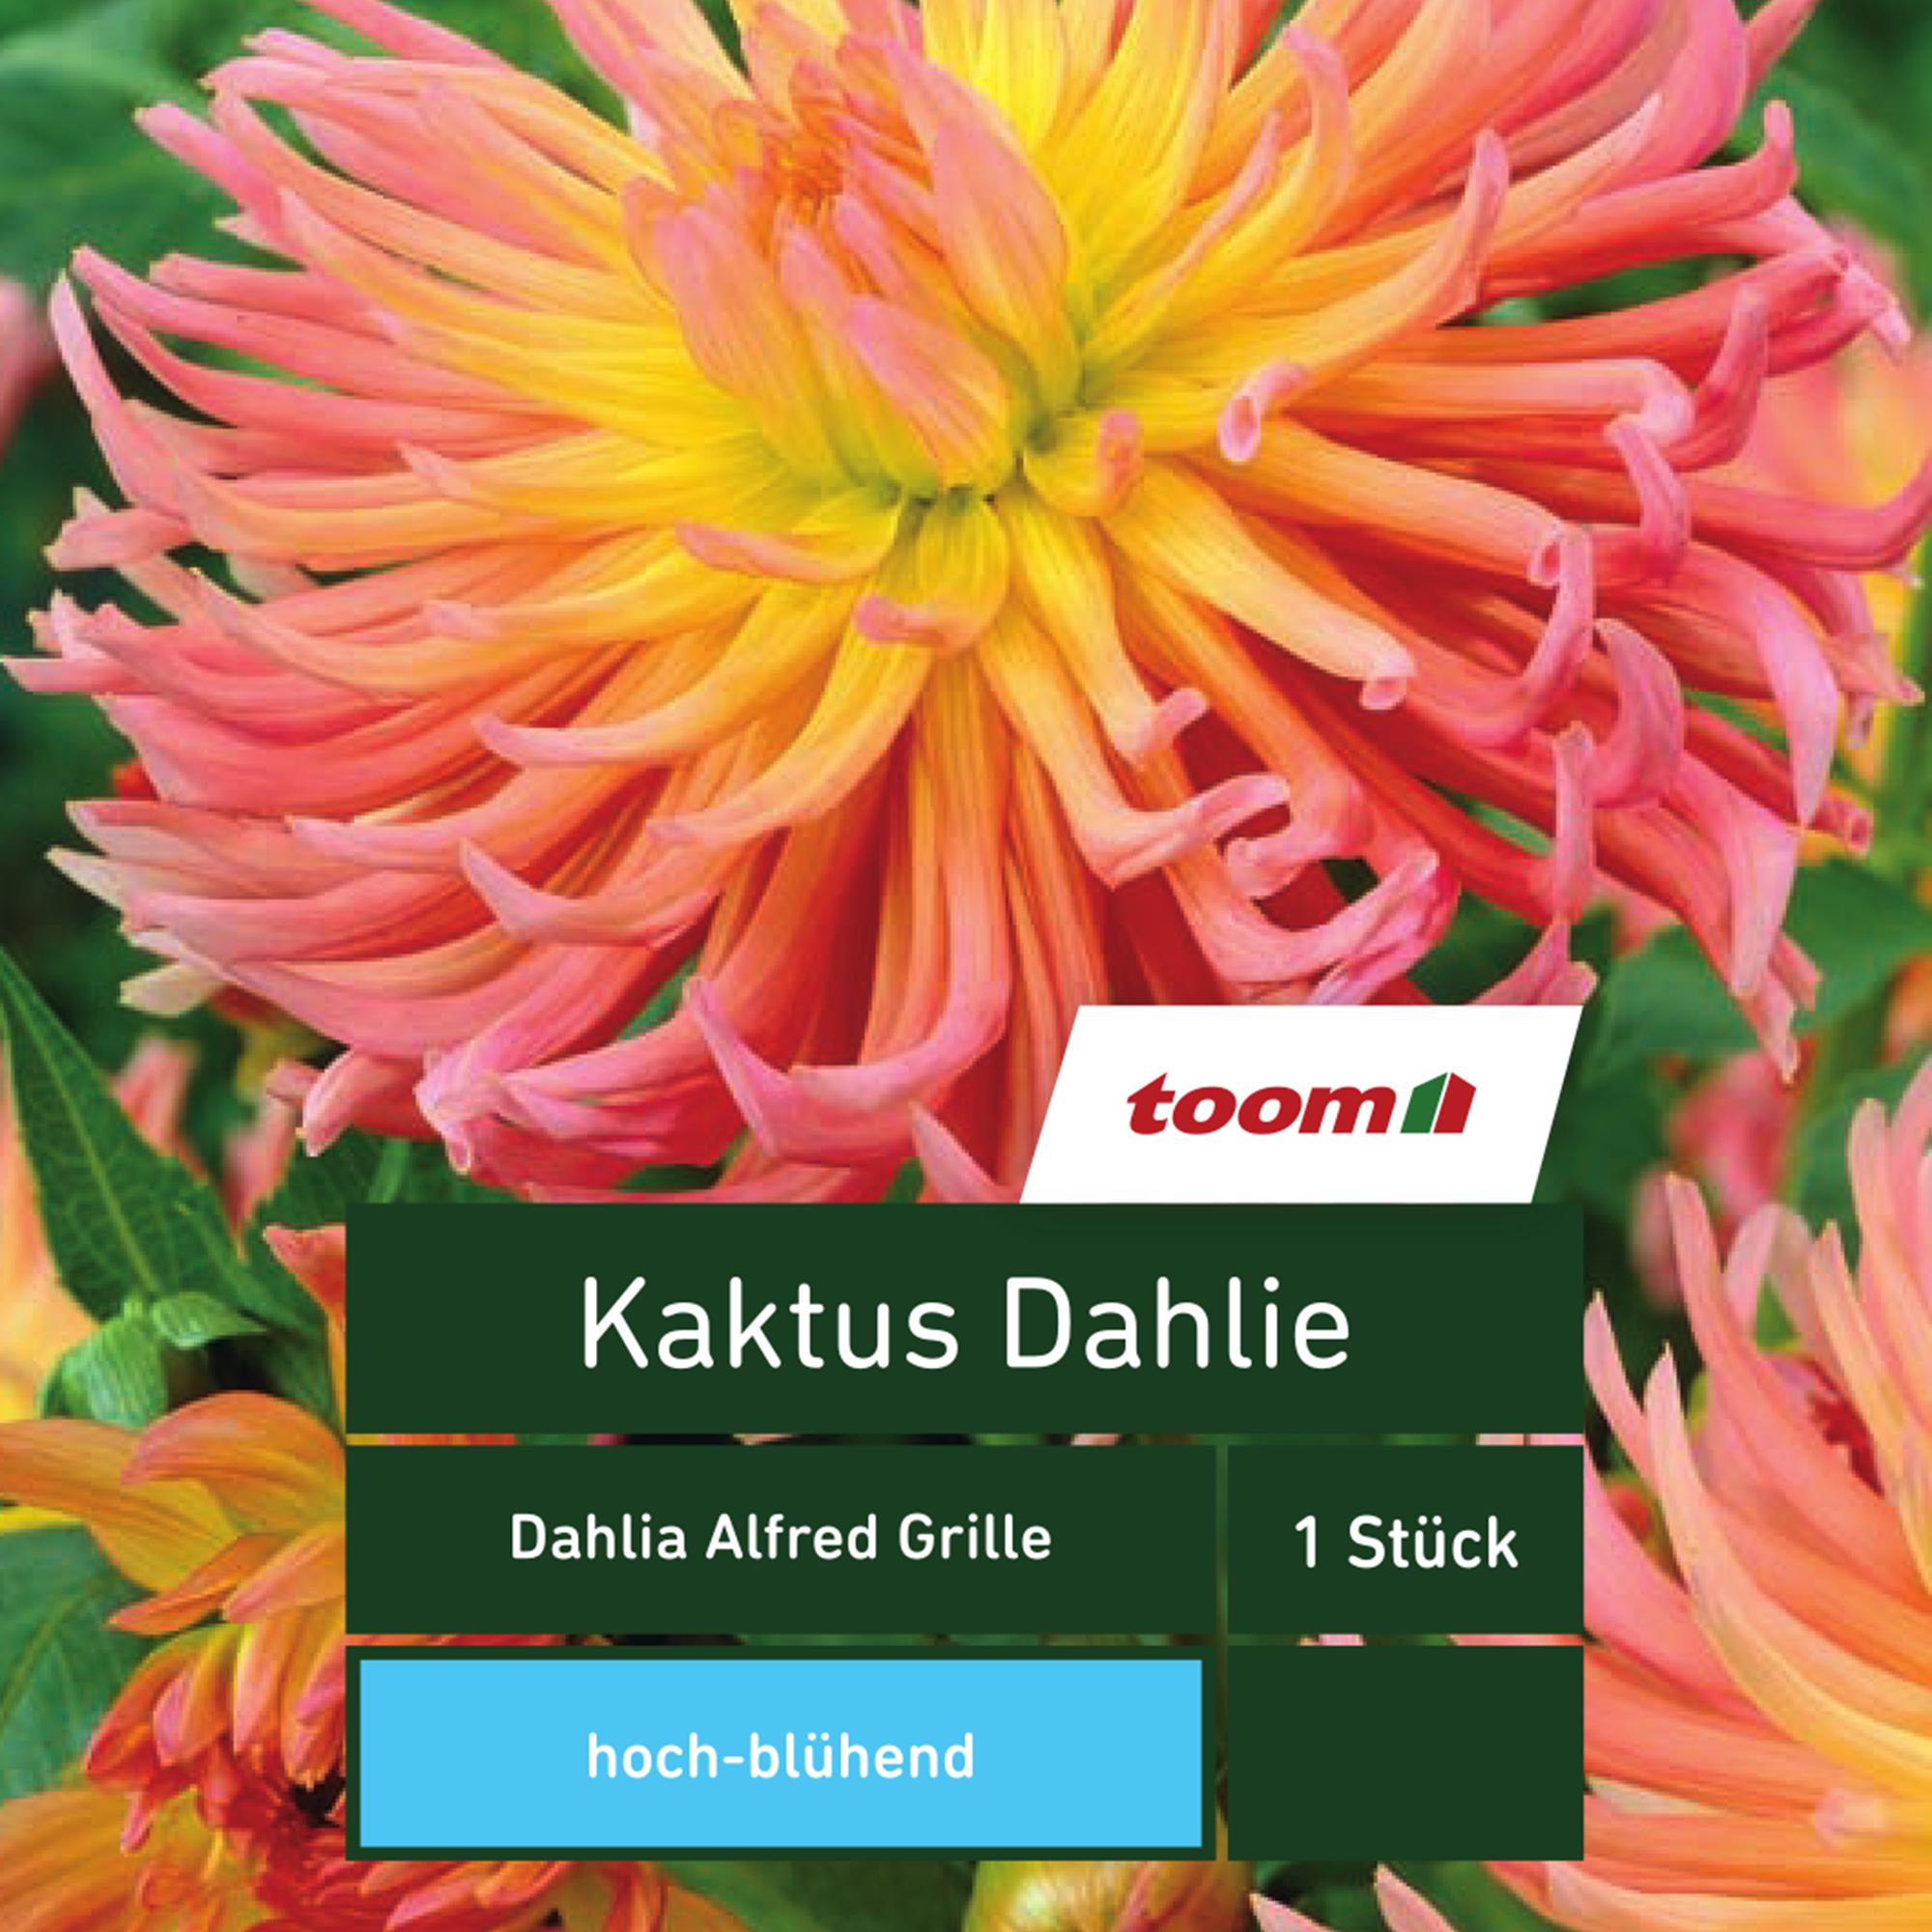 Kaktus-Dahlie 'Dahlia Alfred Grille', 1 Stück, gelb-rosa + product picture